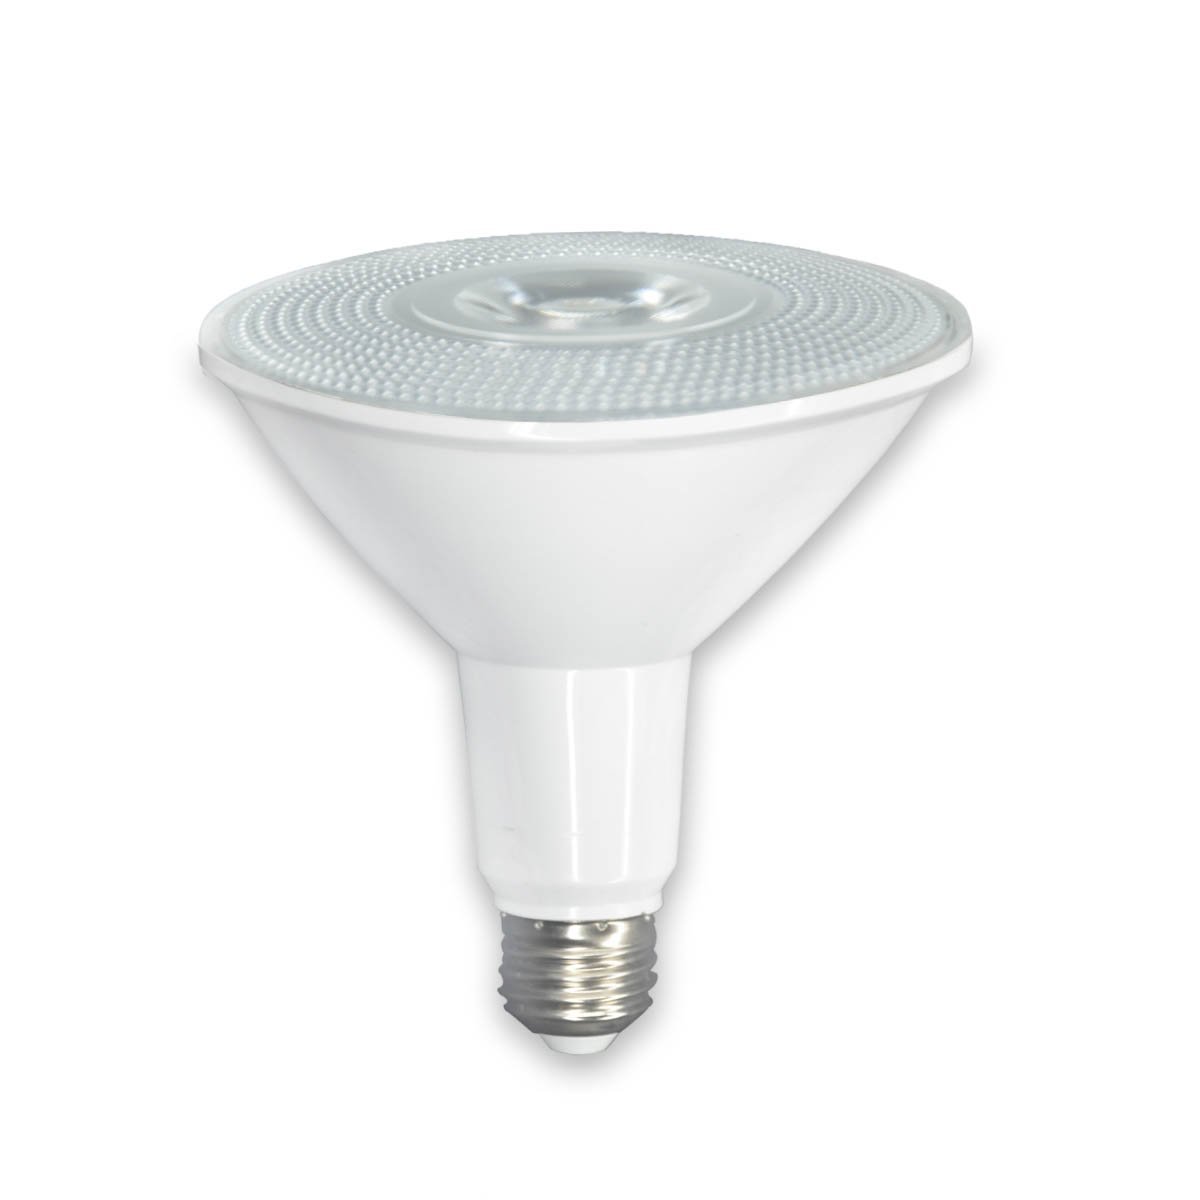 PAR38 LED Flood Light Bulb, IP65 Indoor and Outdoor Use,20W LED Flood Light Bulb